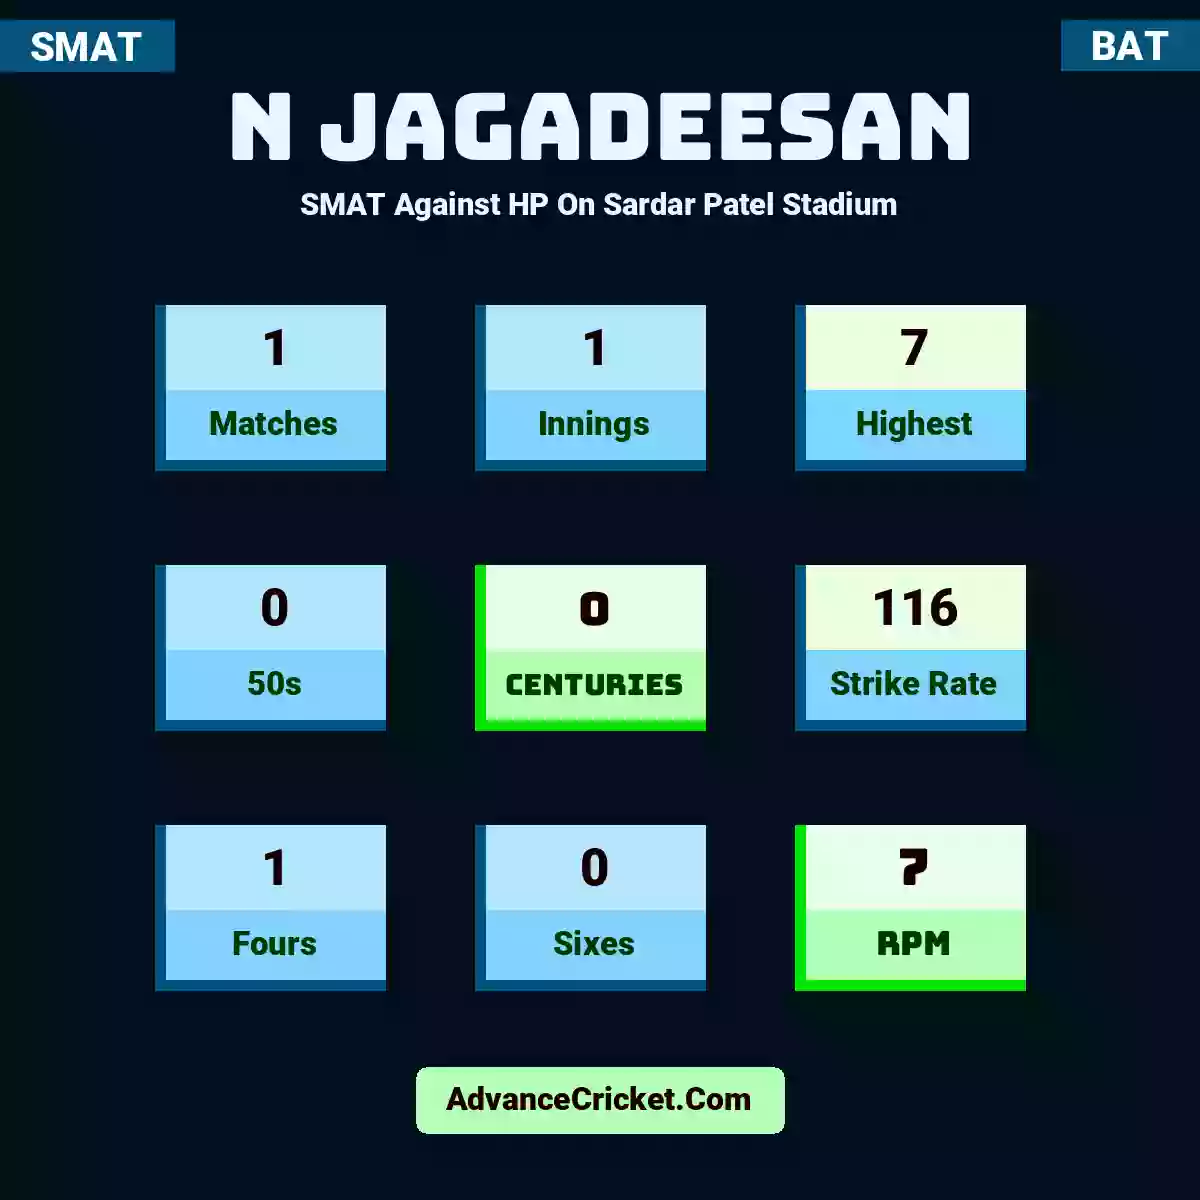 N Jagadeesan SMAT  Against HP On Sardar Patel Stadium, N Jagadeesan played 1 matches, scored 7 runs as highest, 0 half-centuries, and 0 centuries, with a strike rate of 116. N.Jagadeesan hit 1 fours and 0 sixes, with an RPM of 7.